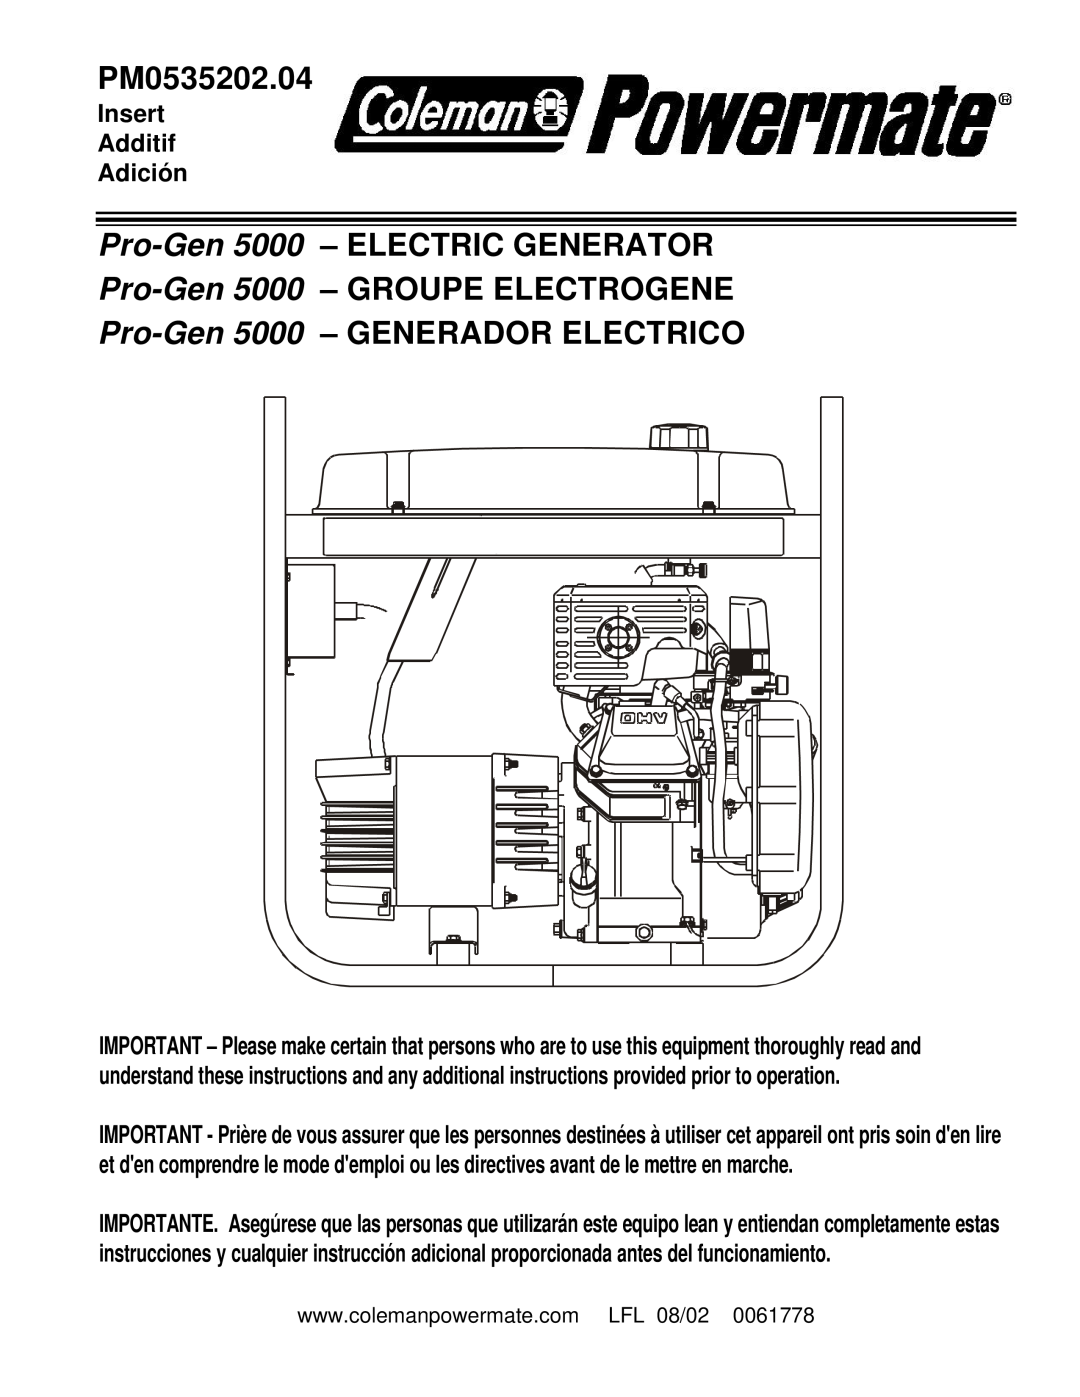 Powermate PM0535202.04 manual Pro-Gen5000 - ELECTRIC GENERATOR, Pro-Gen5000 - GROUPE ELECTROGENE, Insert Additif Adición 